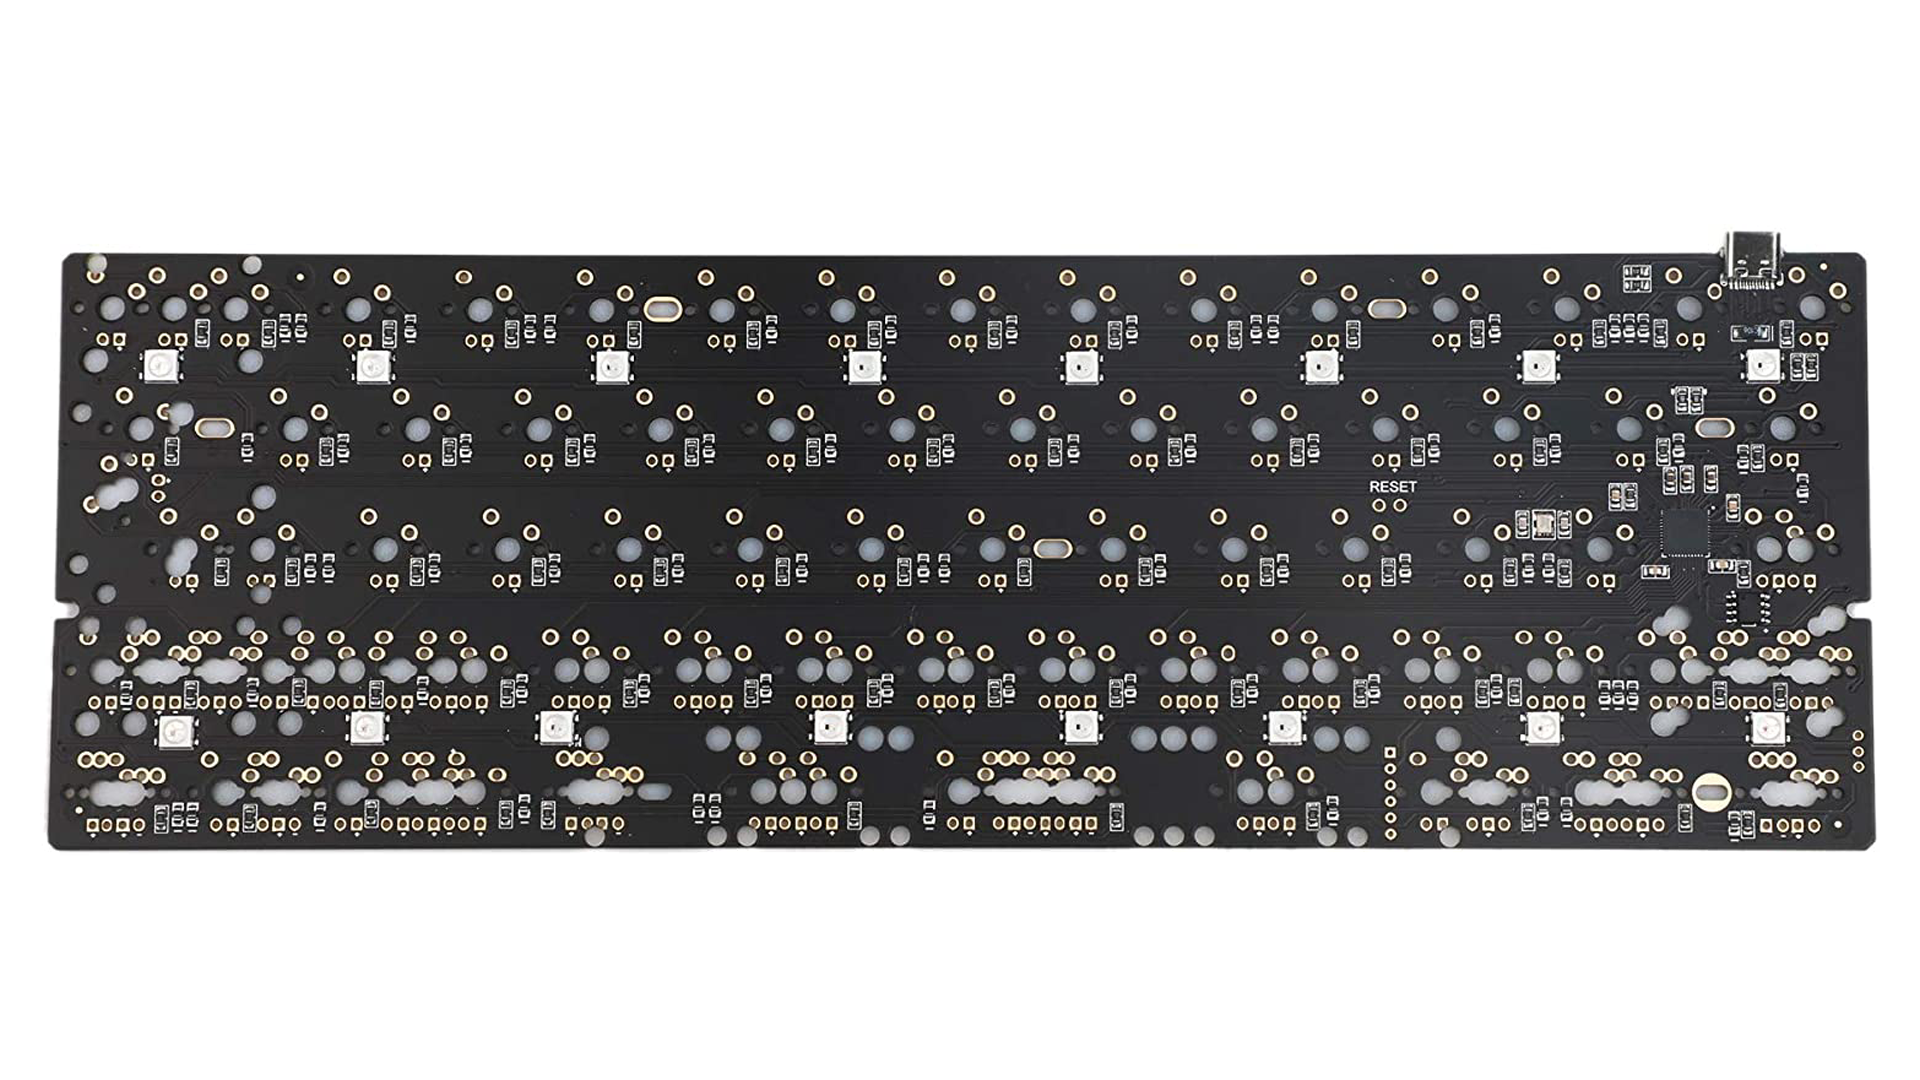 GH60 64 Minila PCB Fully Programmable QMK VIA Underglow RGB Type C Connector for DIY Mechanical Keyboard